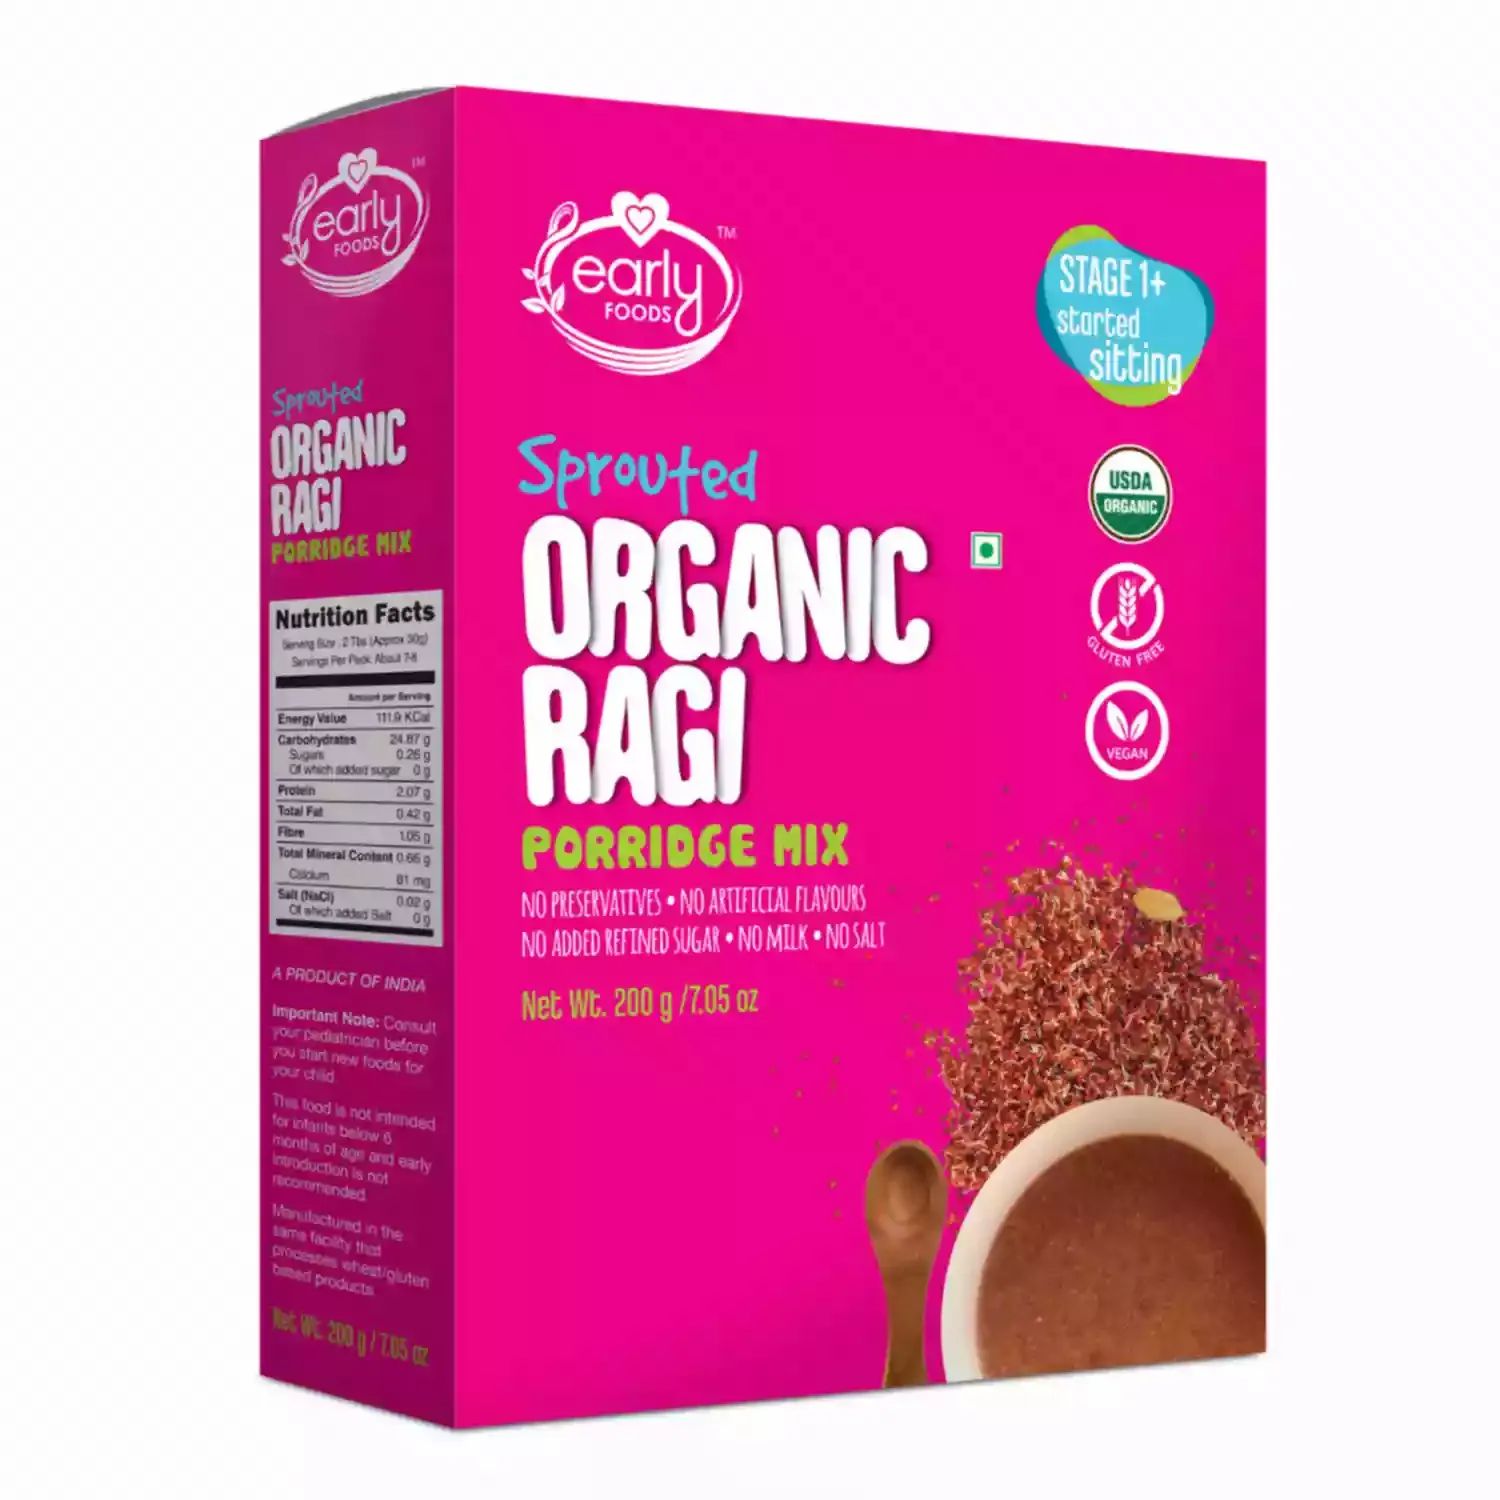 Sprouted Ragi Mix – Yoga Bars